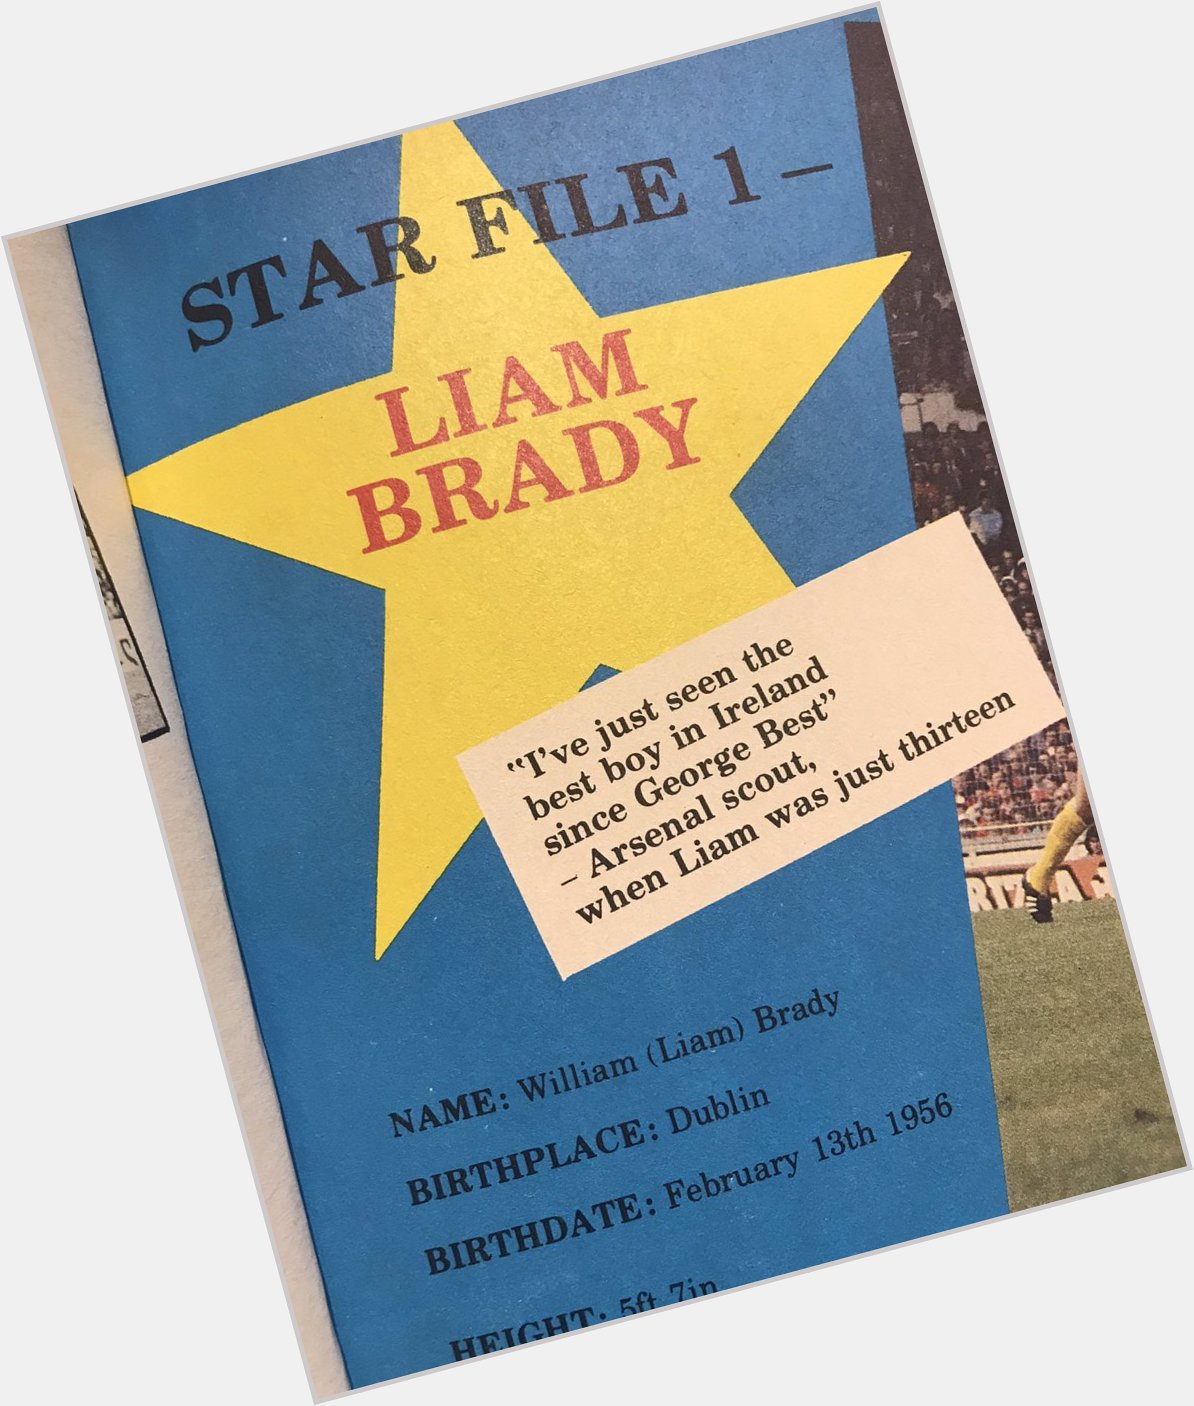 FA Soccer book for boys 1981. Happy birthday to Liam Brady  